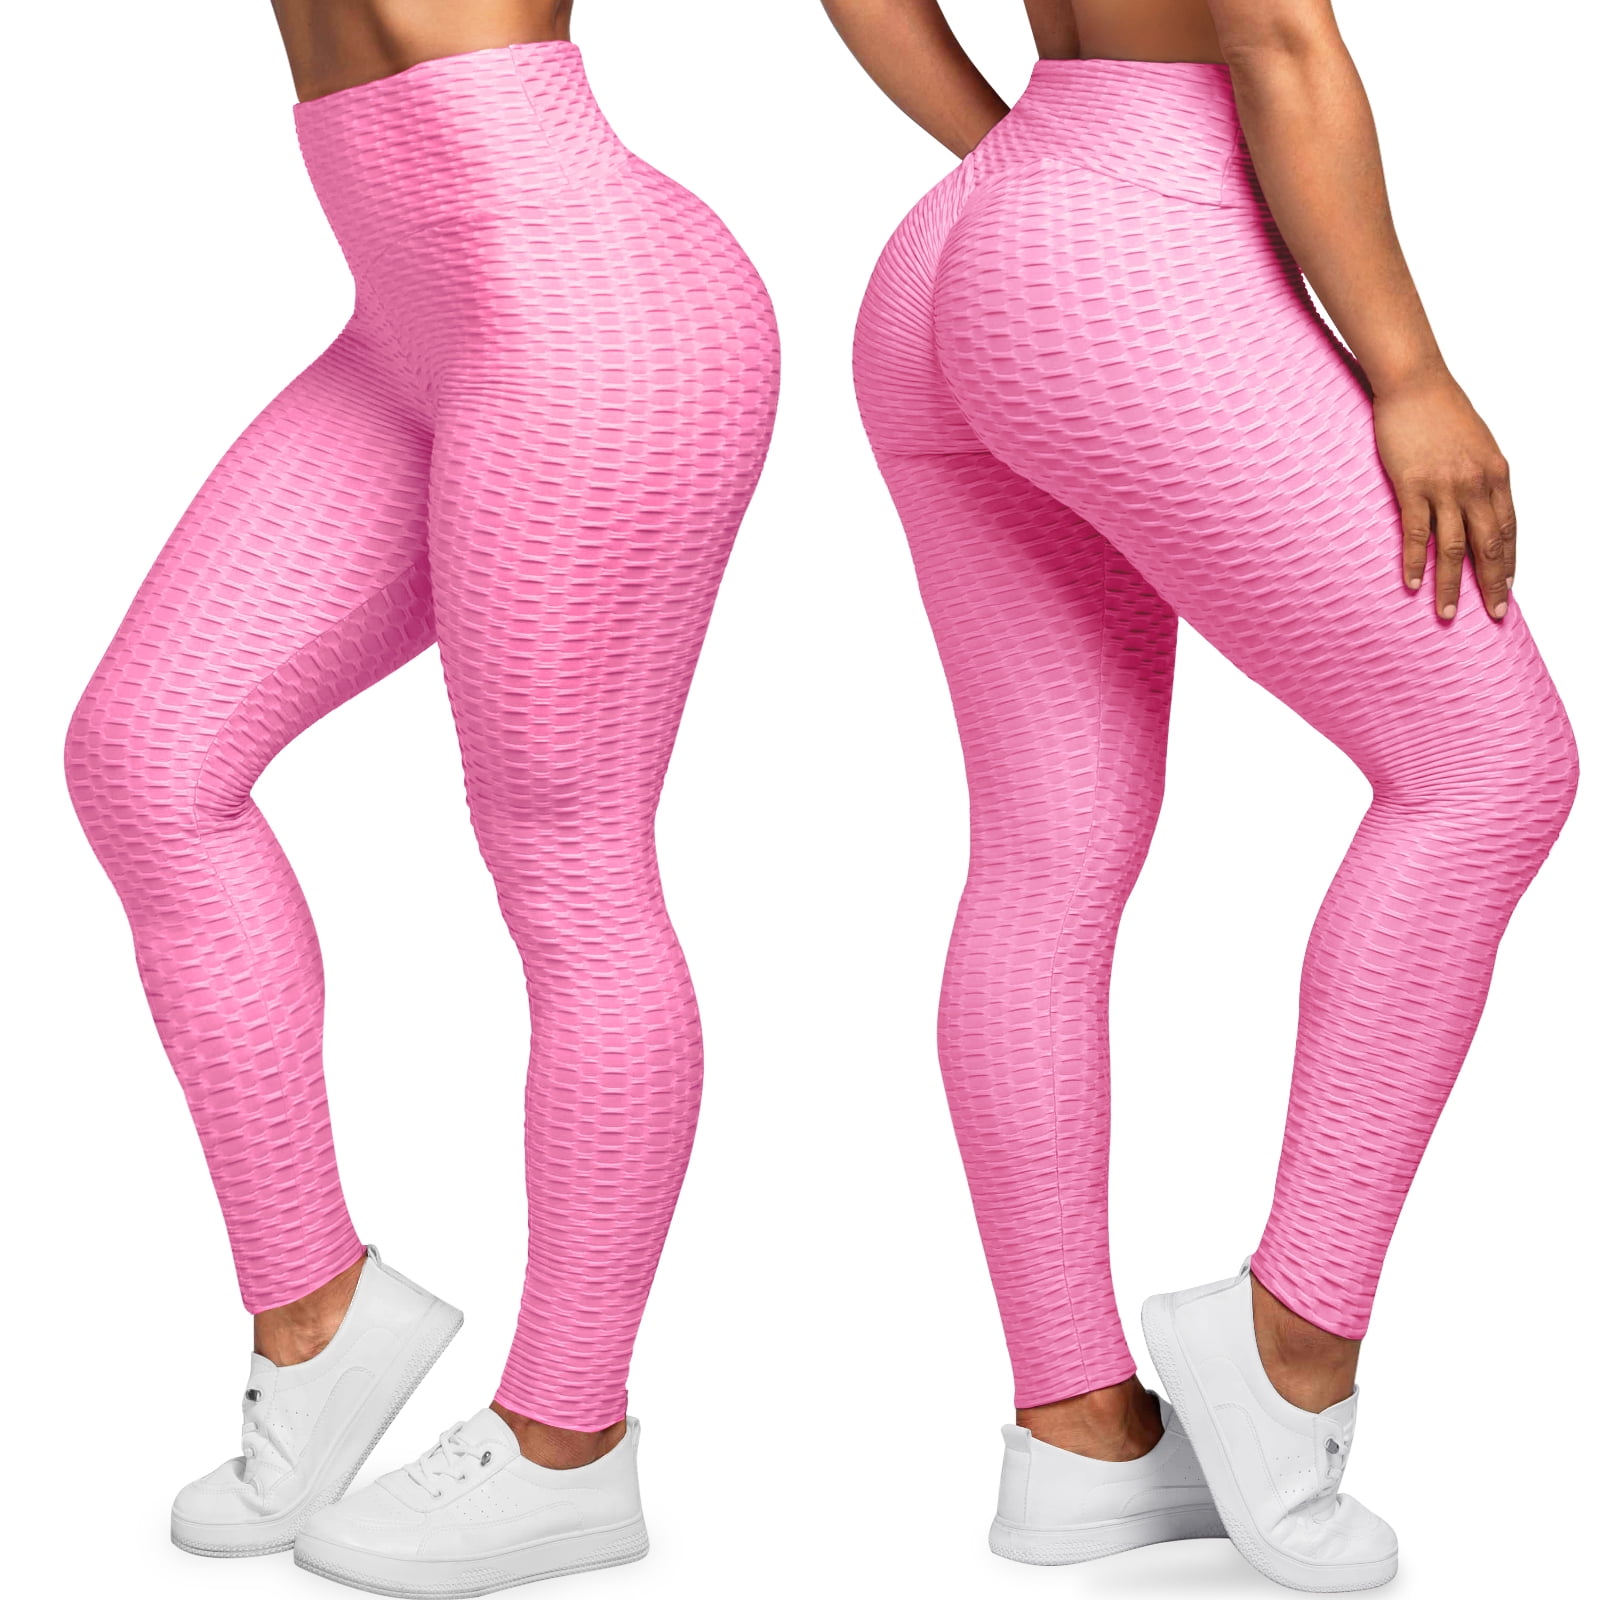 Buy OtherSexy Women High Elastic Fitness Sport Leggings Yoga Pants